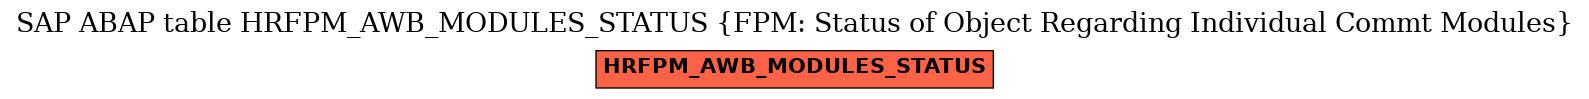 E-R Diagram for table HRFPM_AWB_MODULES_STATUS (FPM: Status of Object Regarding Individual Commt Modules)